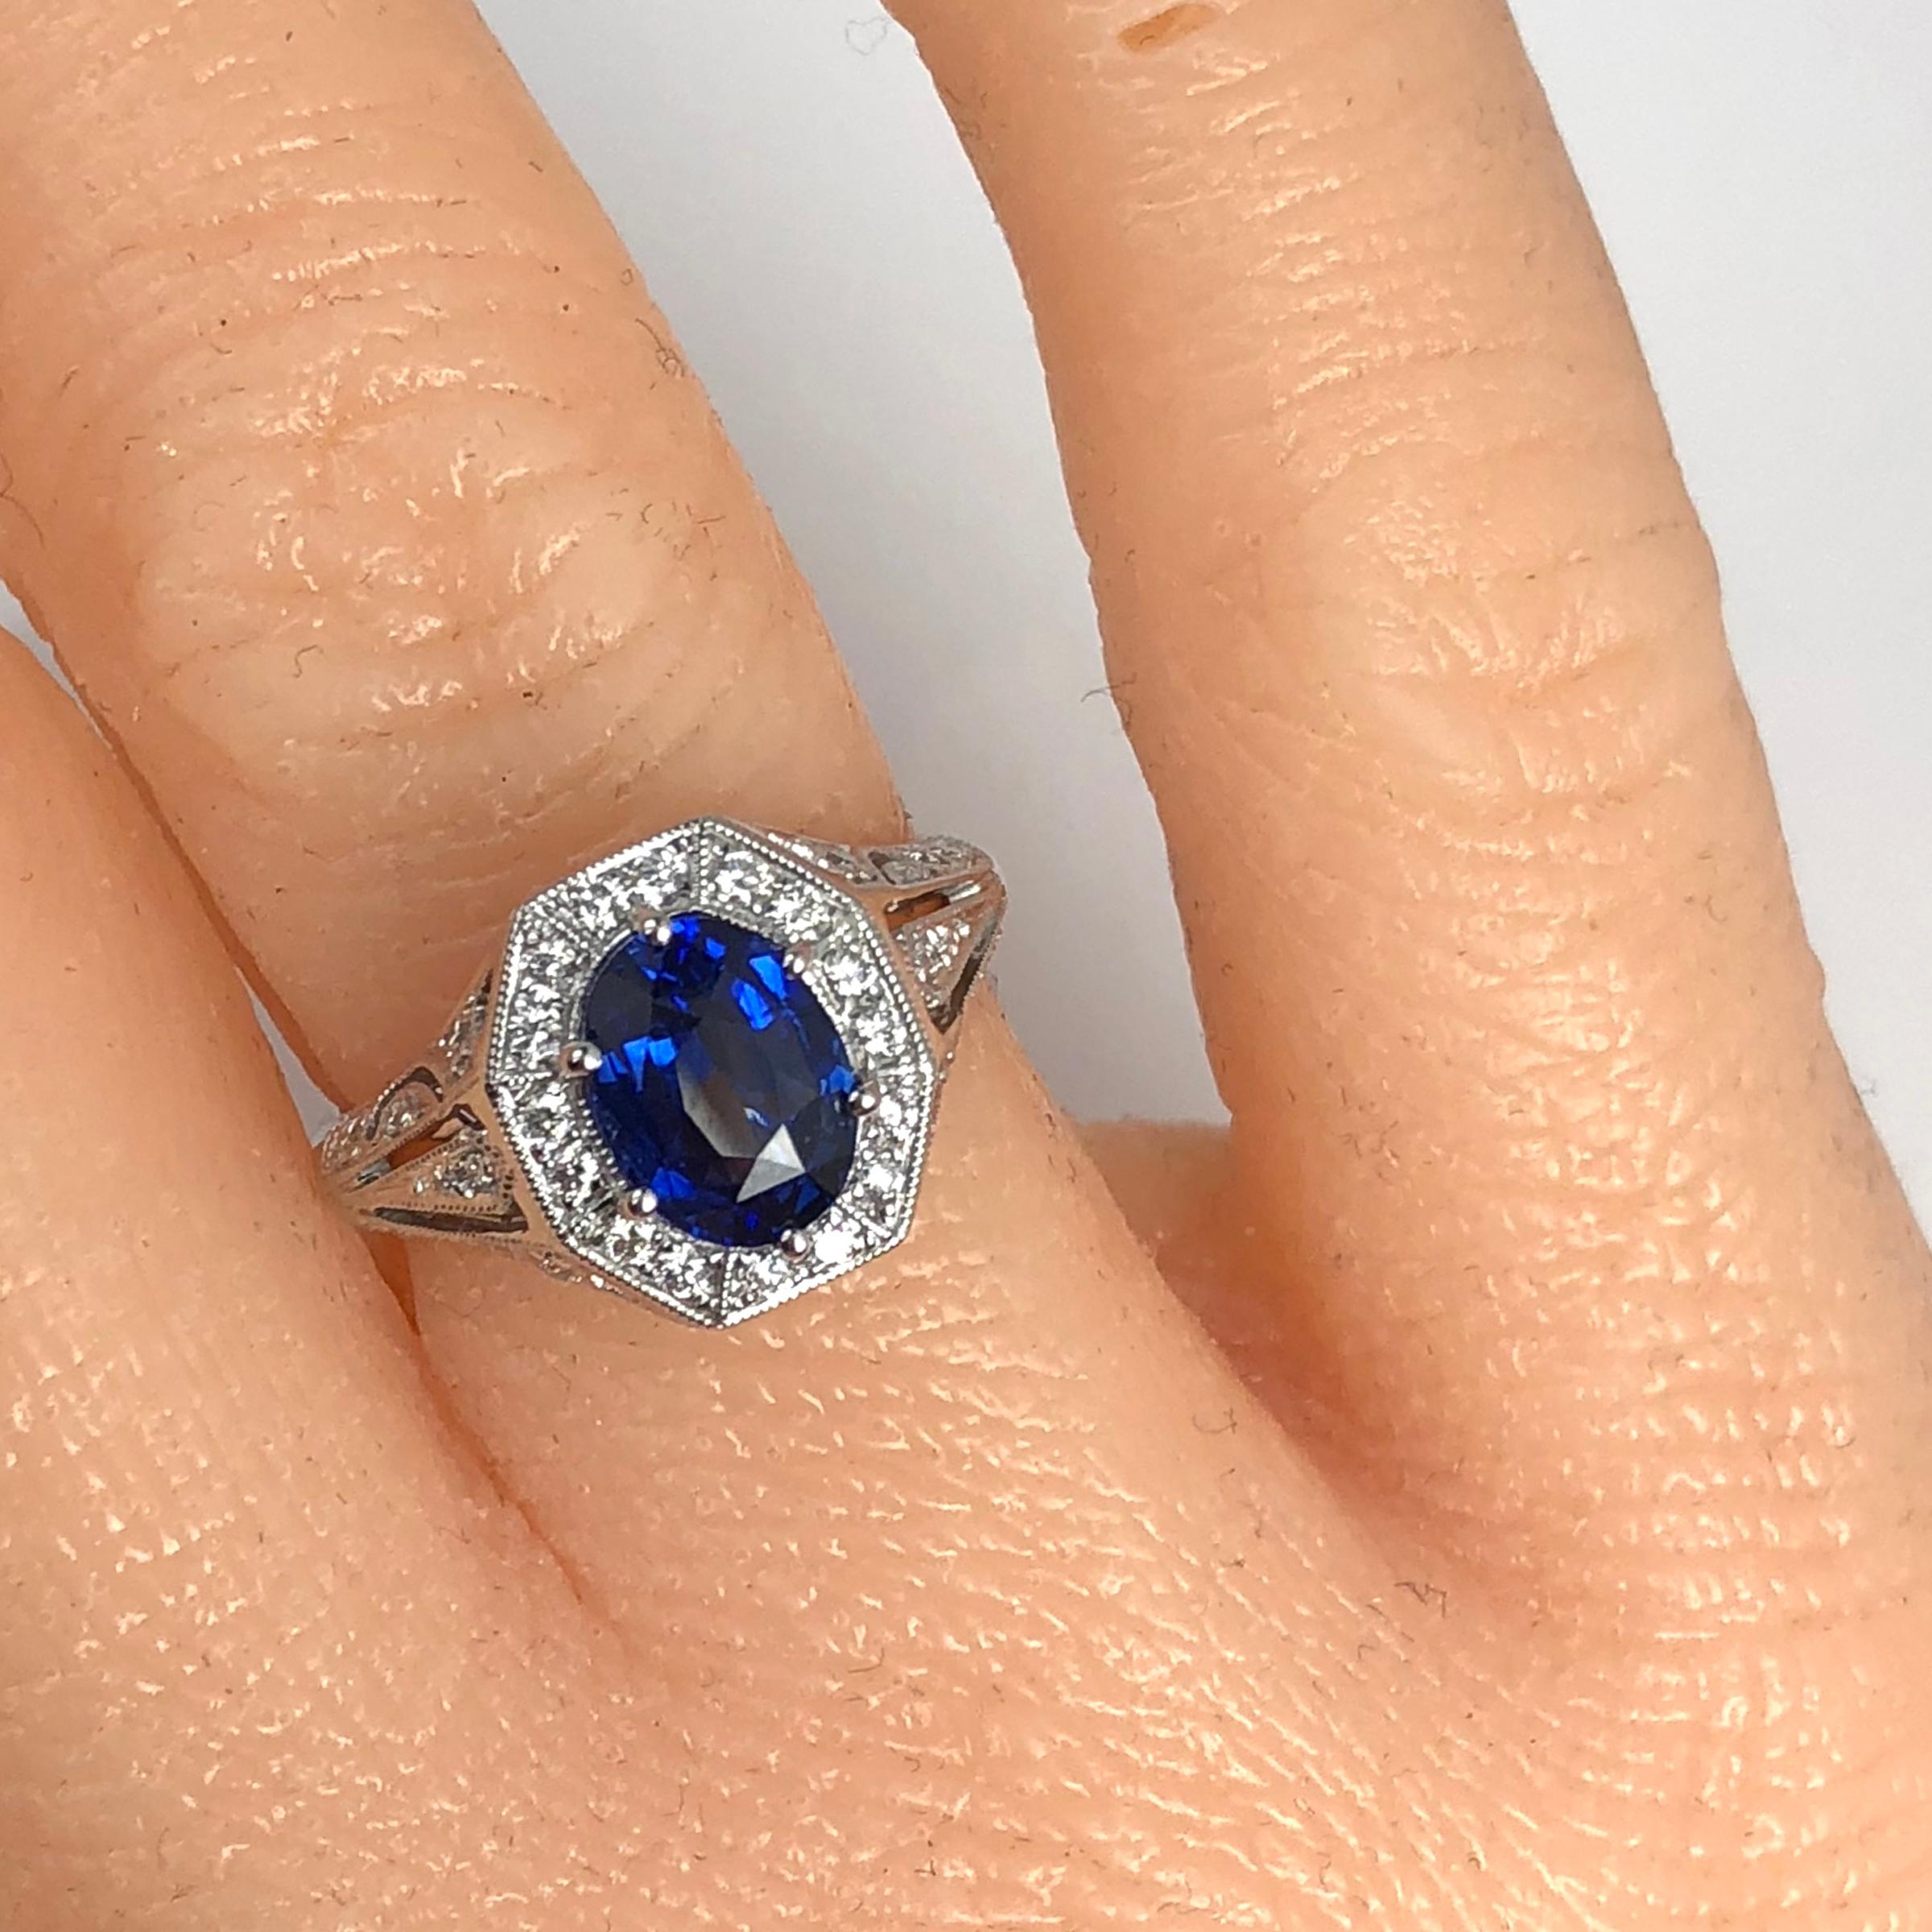 Contemporary DiamondTown 2.02 Carat Oval Cut Fine Blue Sapphire and Diamond Ring